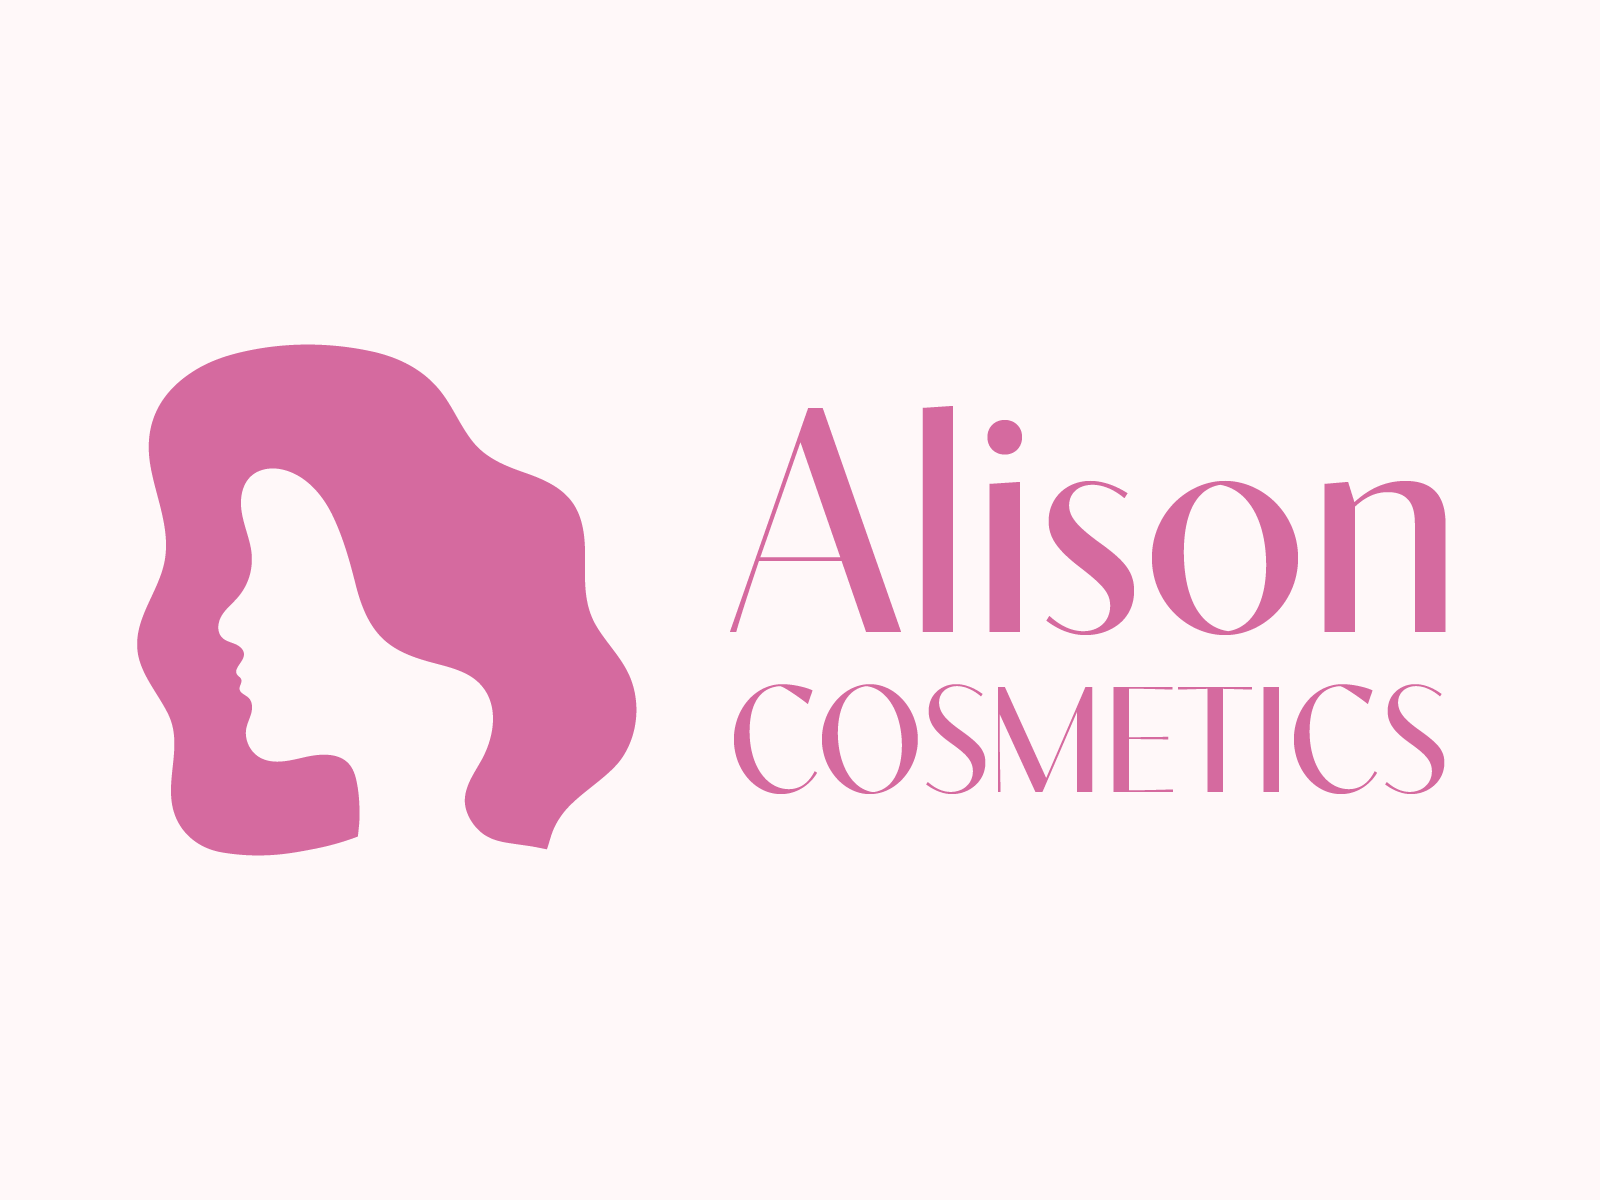 Alison Cosmetics Logo Design by David Grman on Dribbble